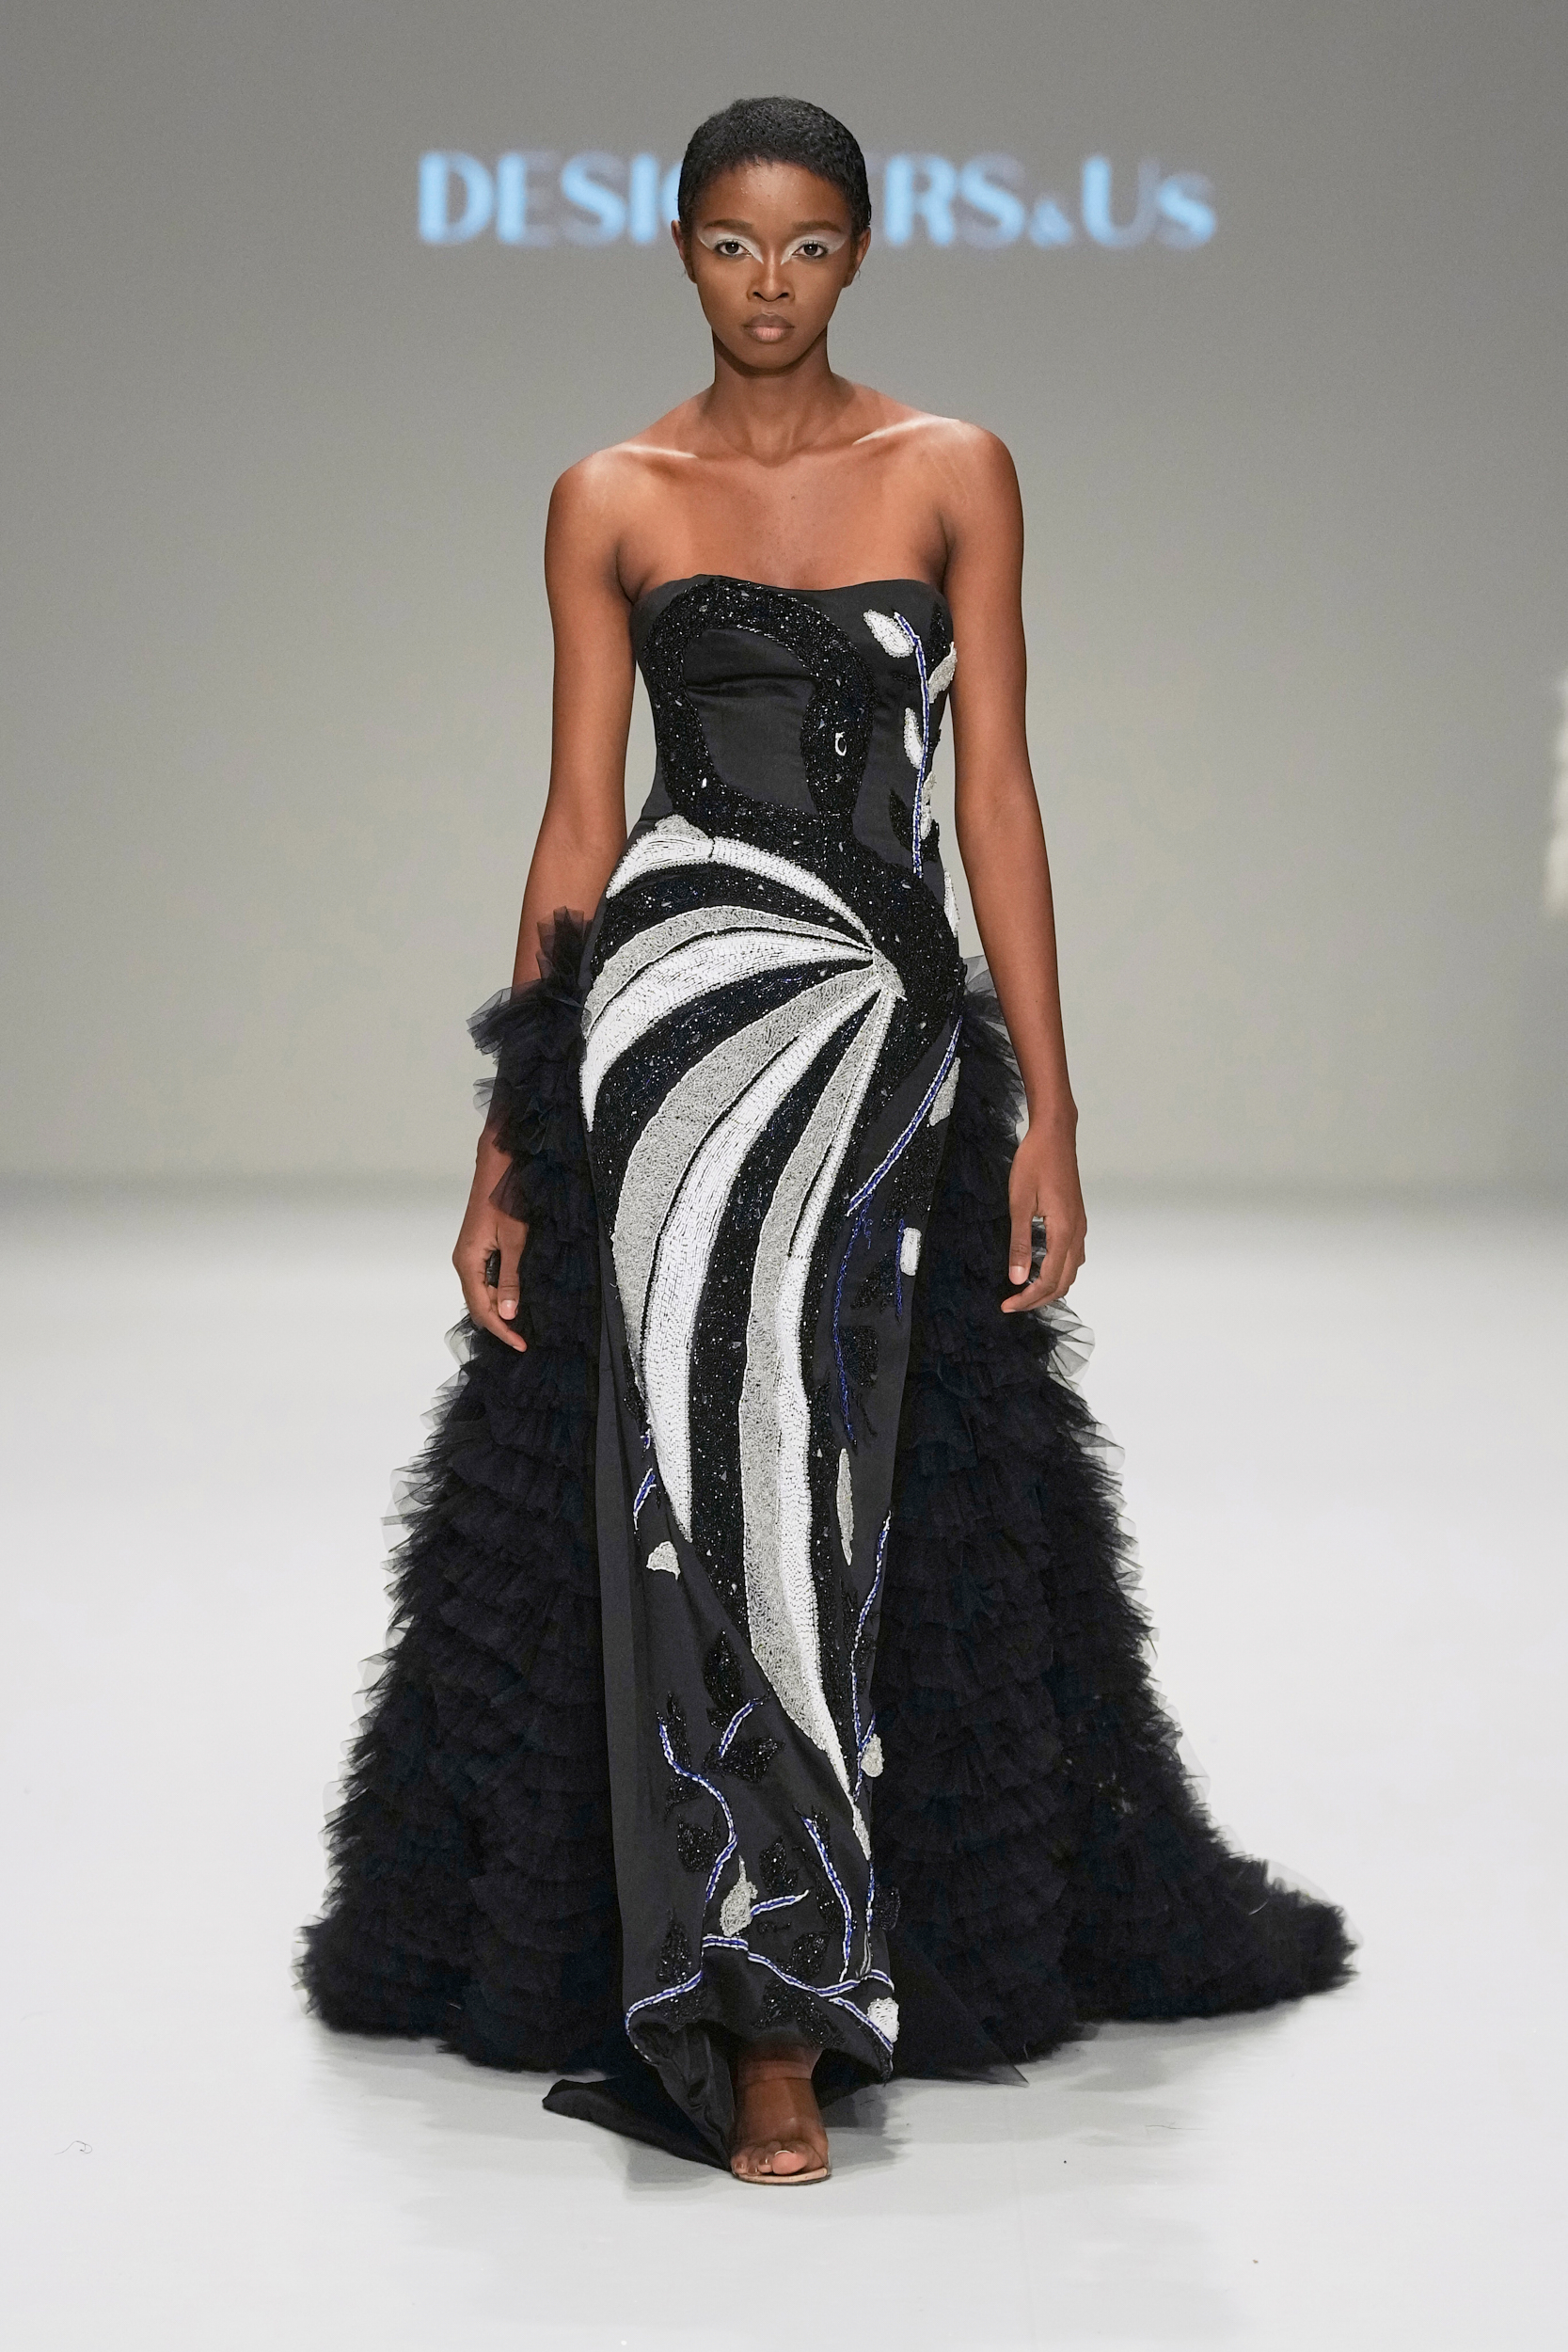 Designers & Us Fall 2023 Couture Fashion Show 